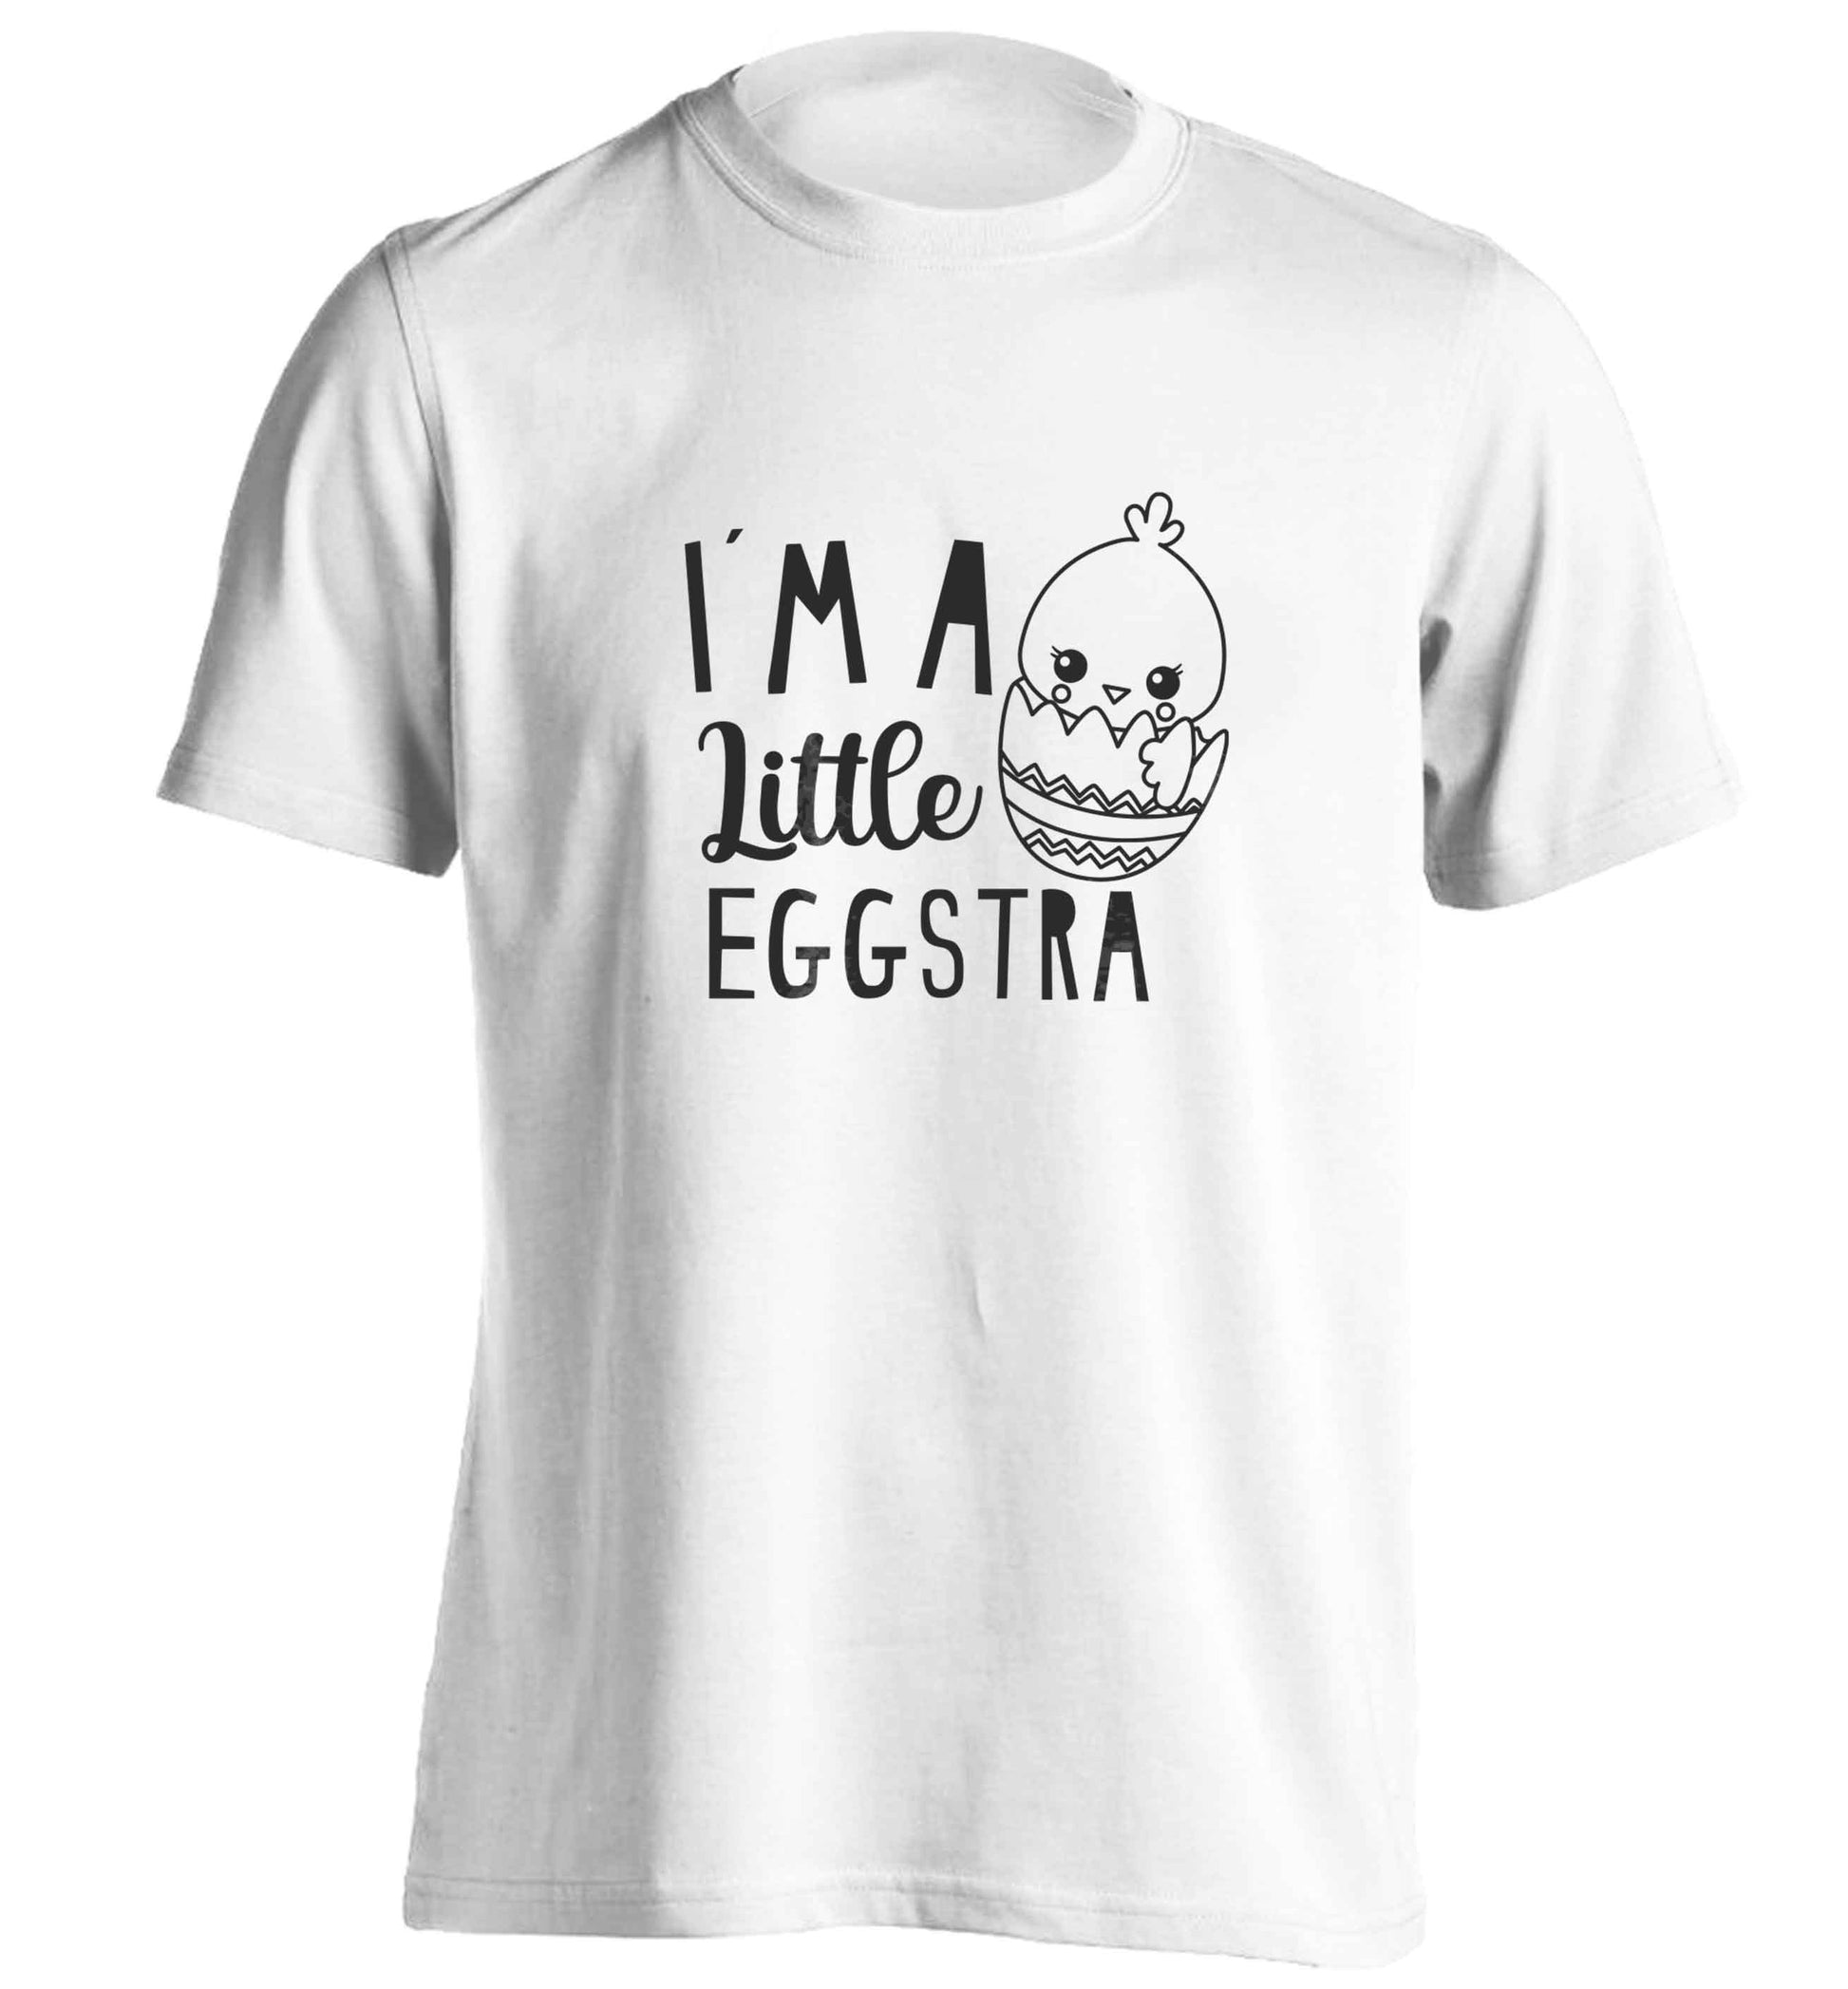 I'm a little eggstra adults unisex white Tshirt 2XL